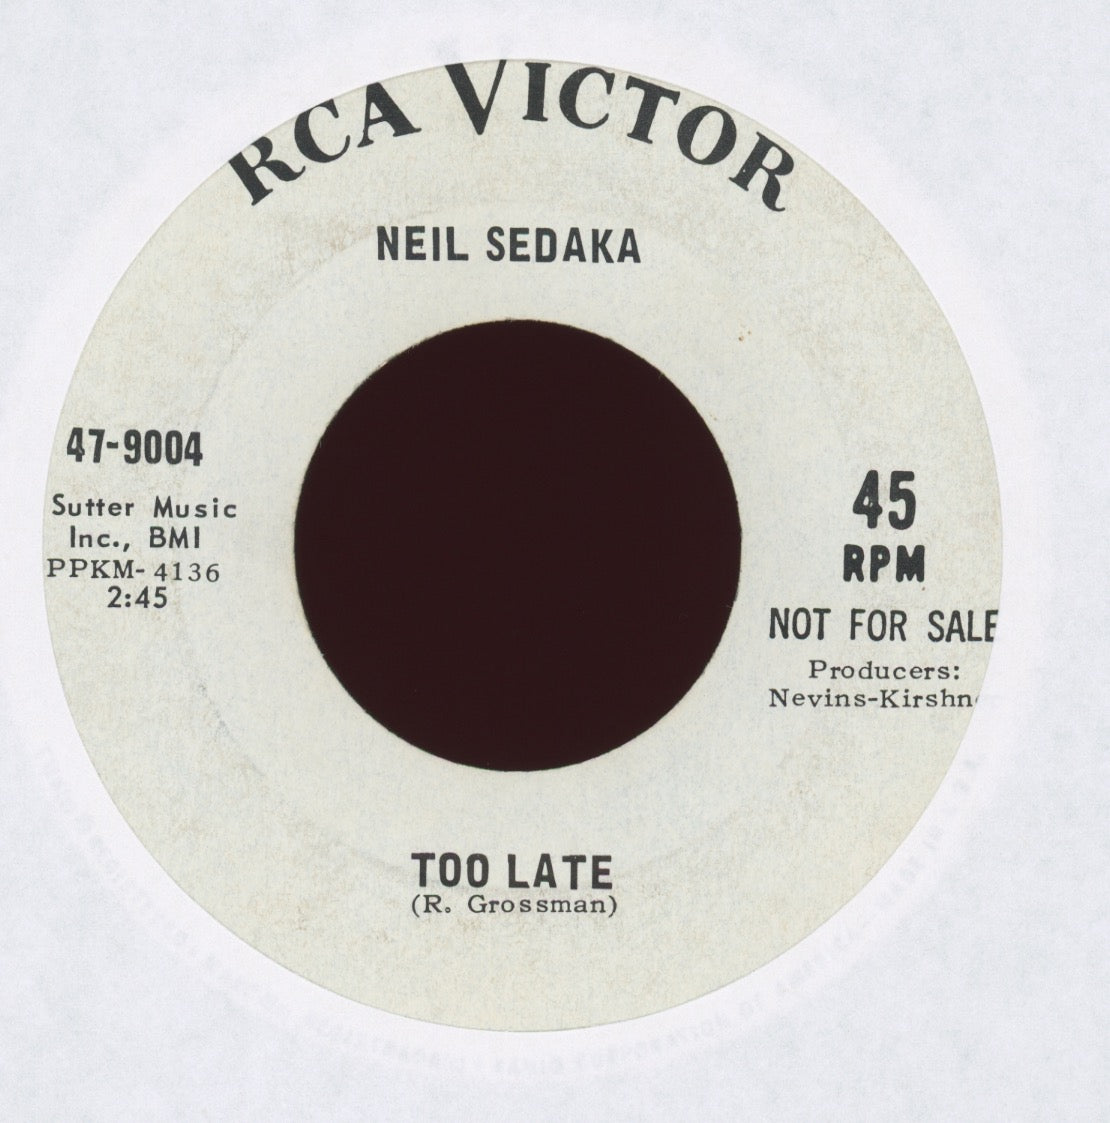 Neil Sedaka - We Can Make It If We Try on RCA Promo